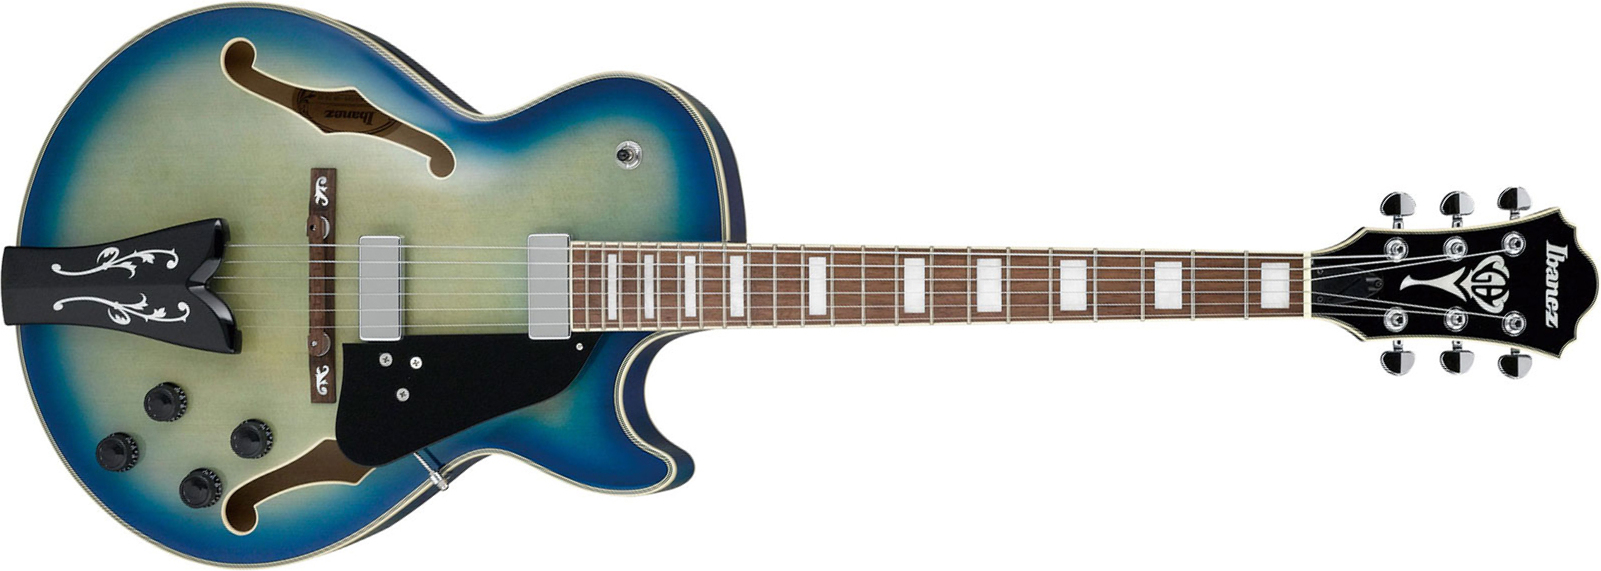 Ibanez George Benson Gb10em Jbb Signature Hh Ht Eb - Jet Blue Burst - Hollow bodytock elektrische gitaar - Main picture